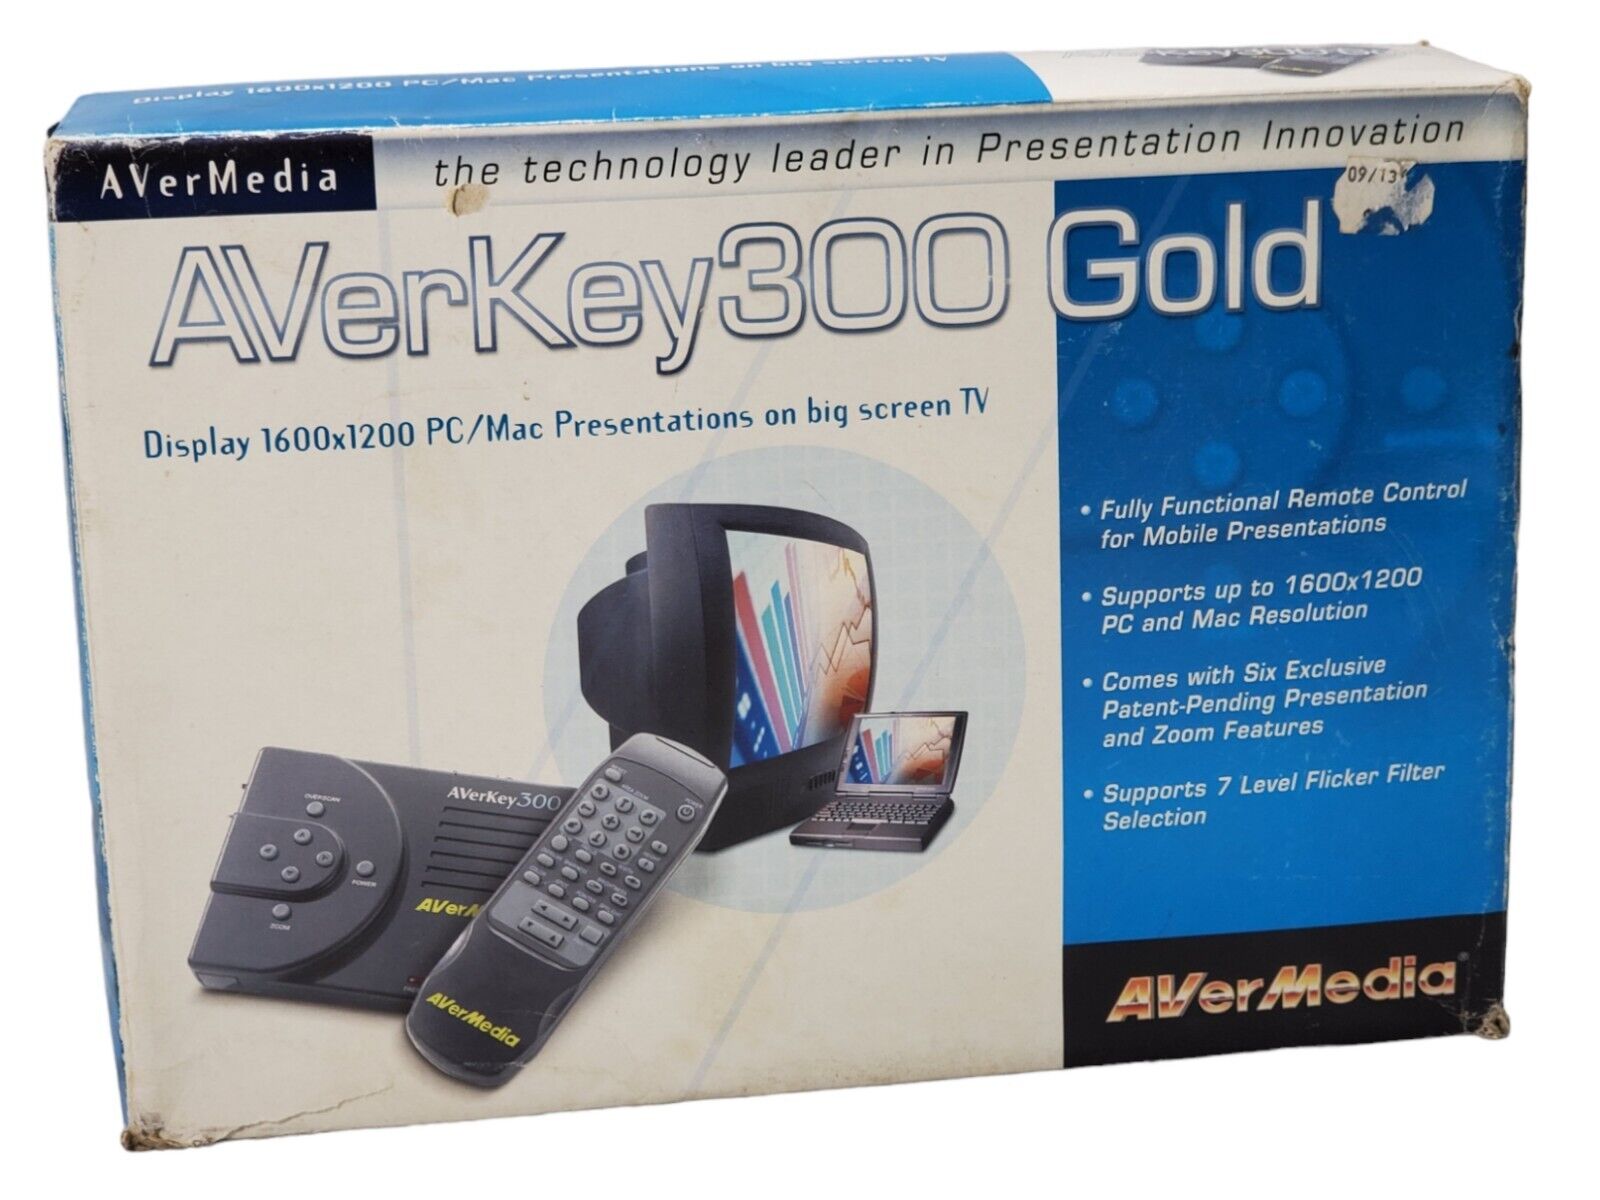 Avermedia Averkey300 Gold 1600 X 1200 PC/MAC PRESENTATIONS ON BIG SCREEN TV 